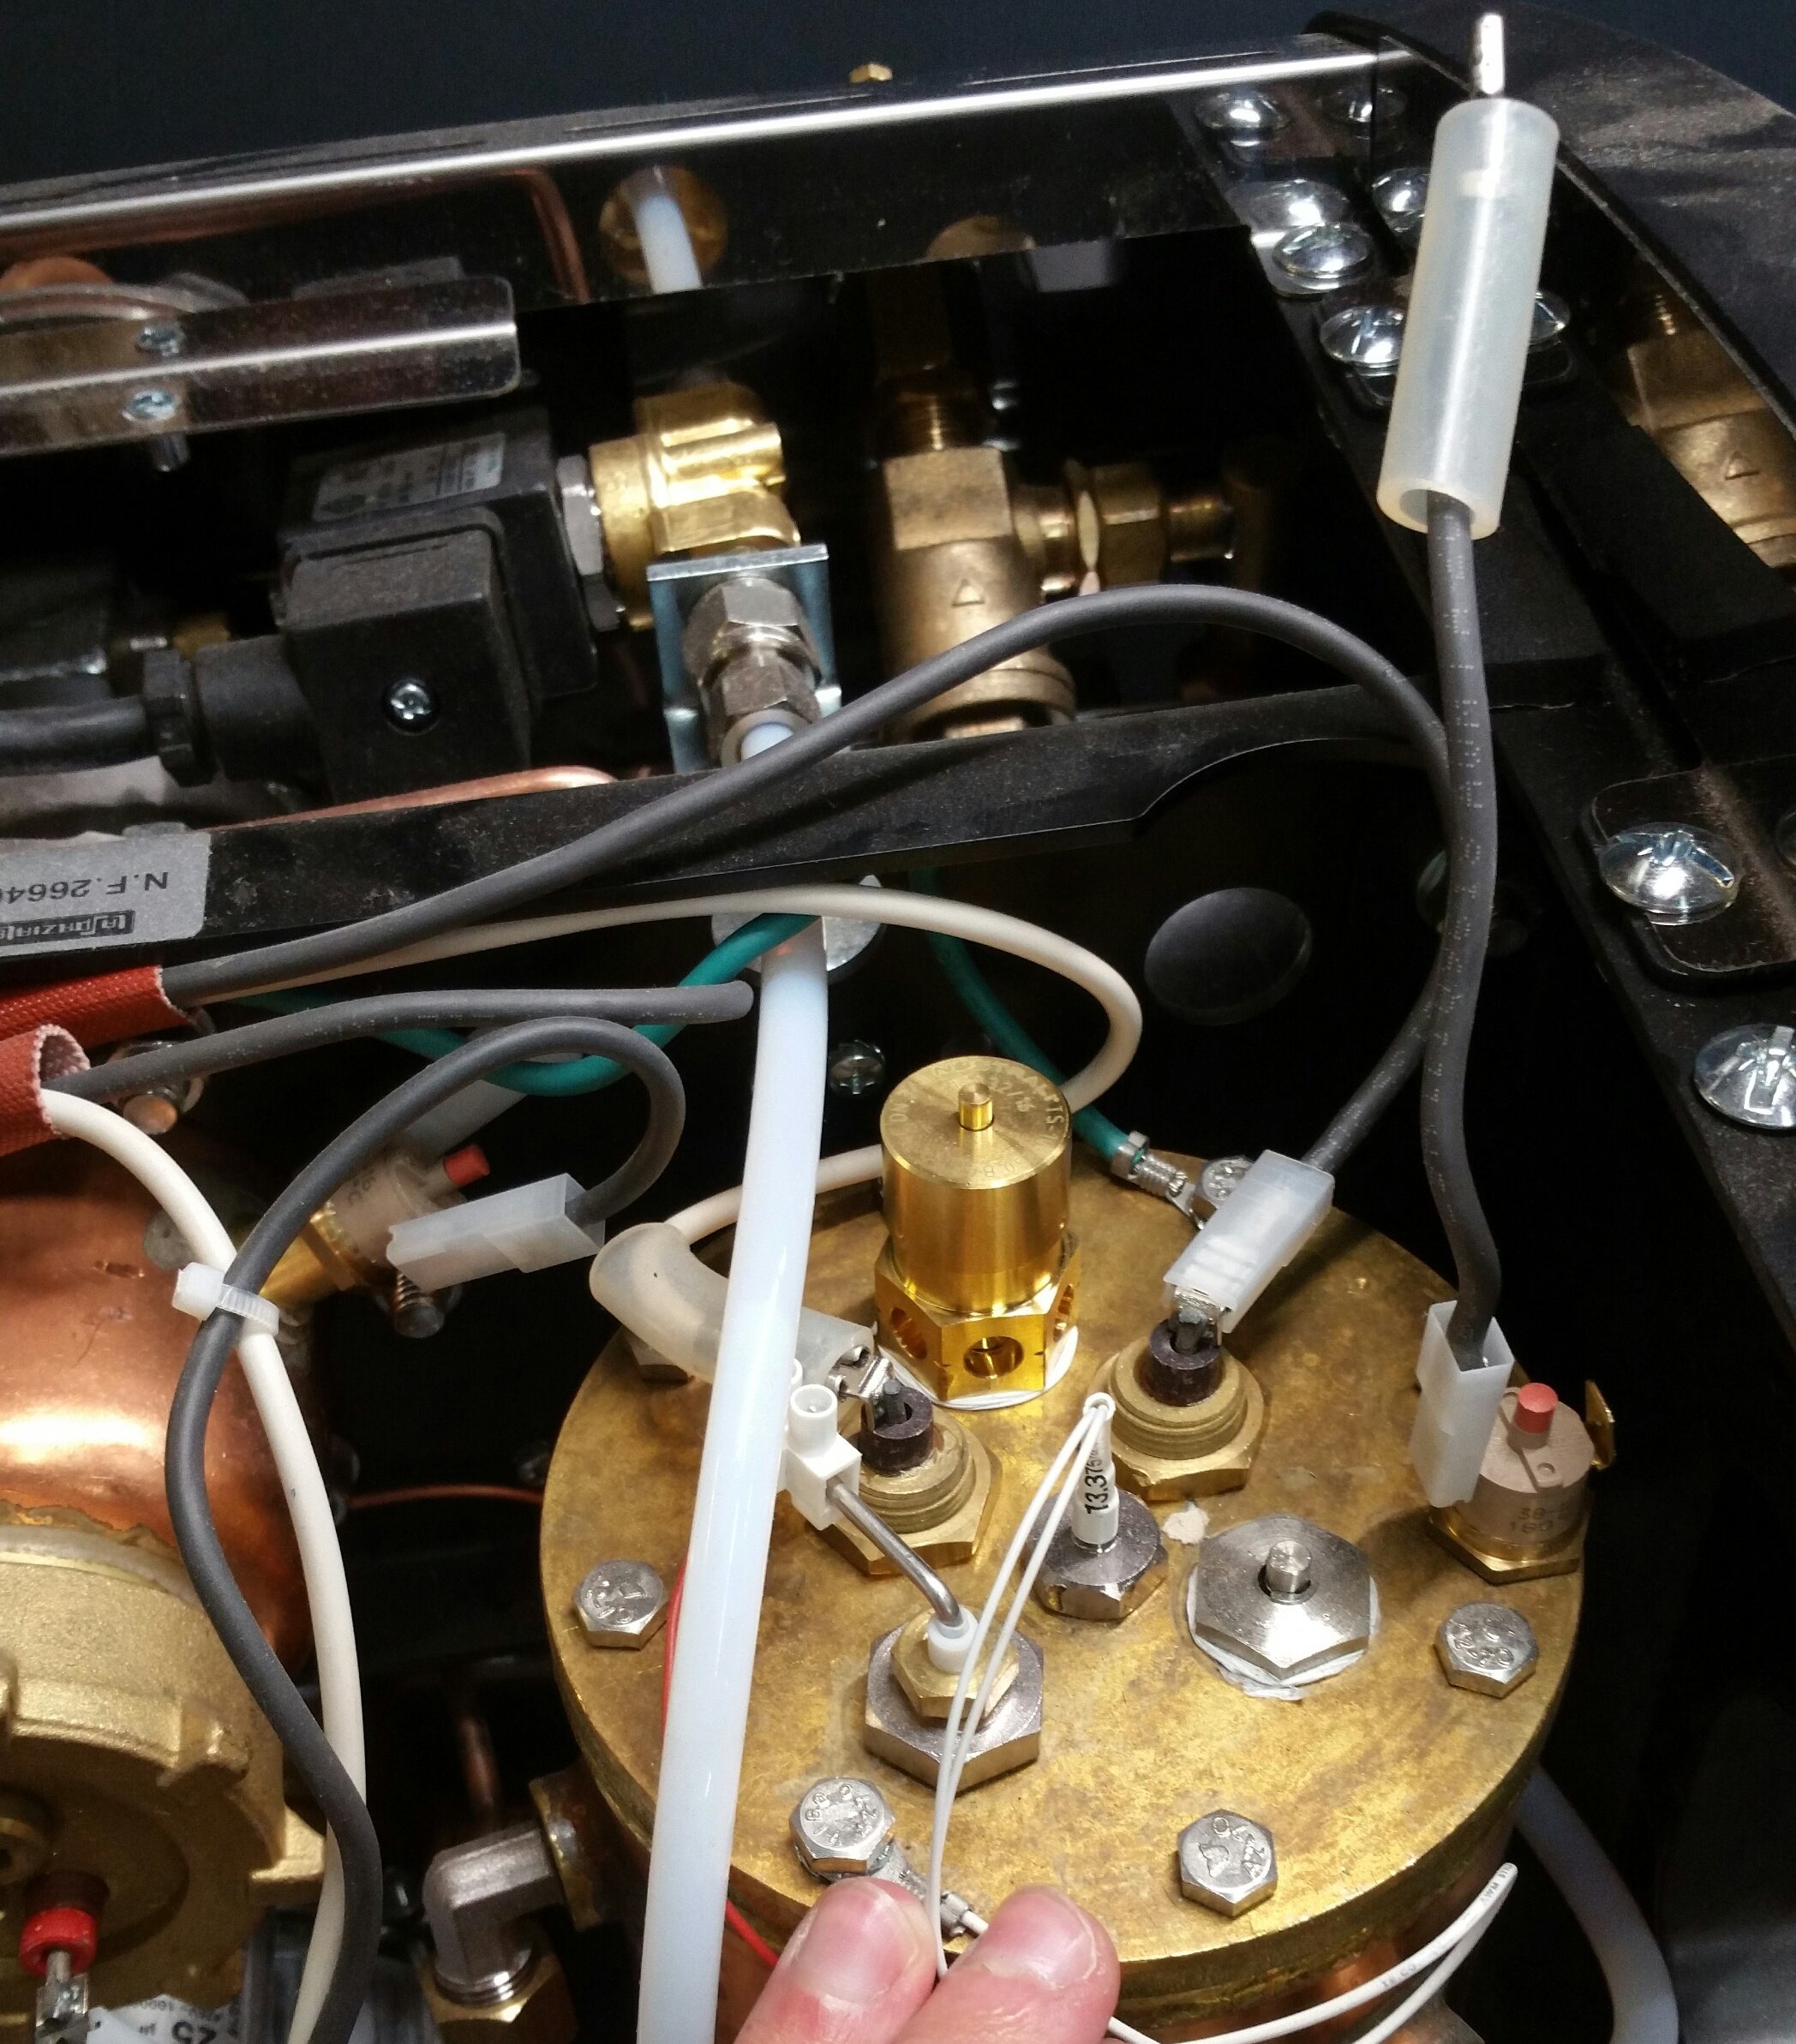 LUCCA A53 Mini: Steam Boiler Not Heating